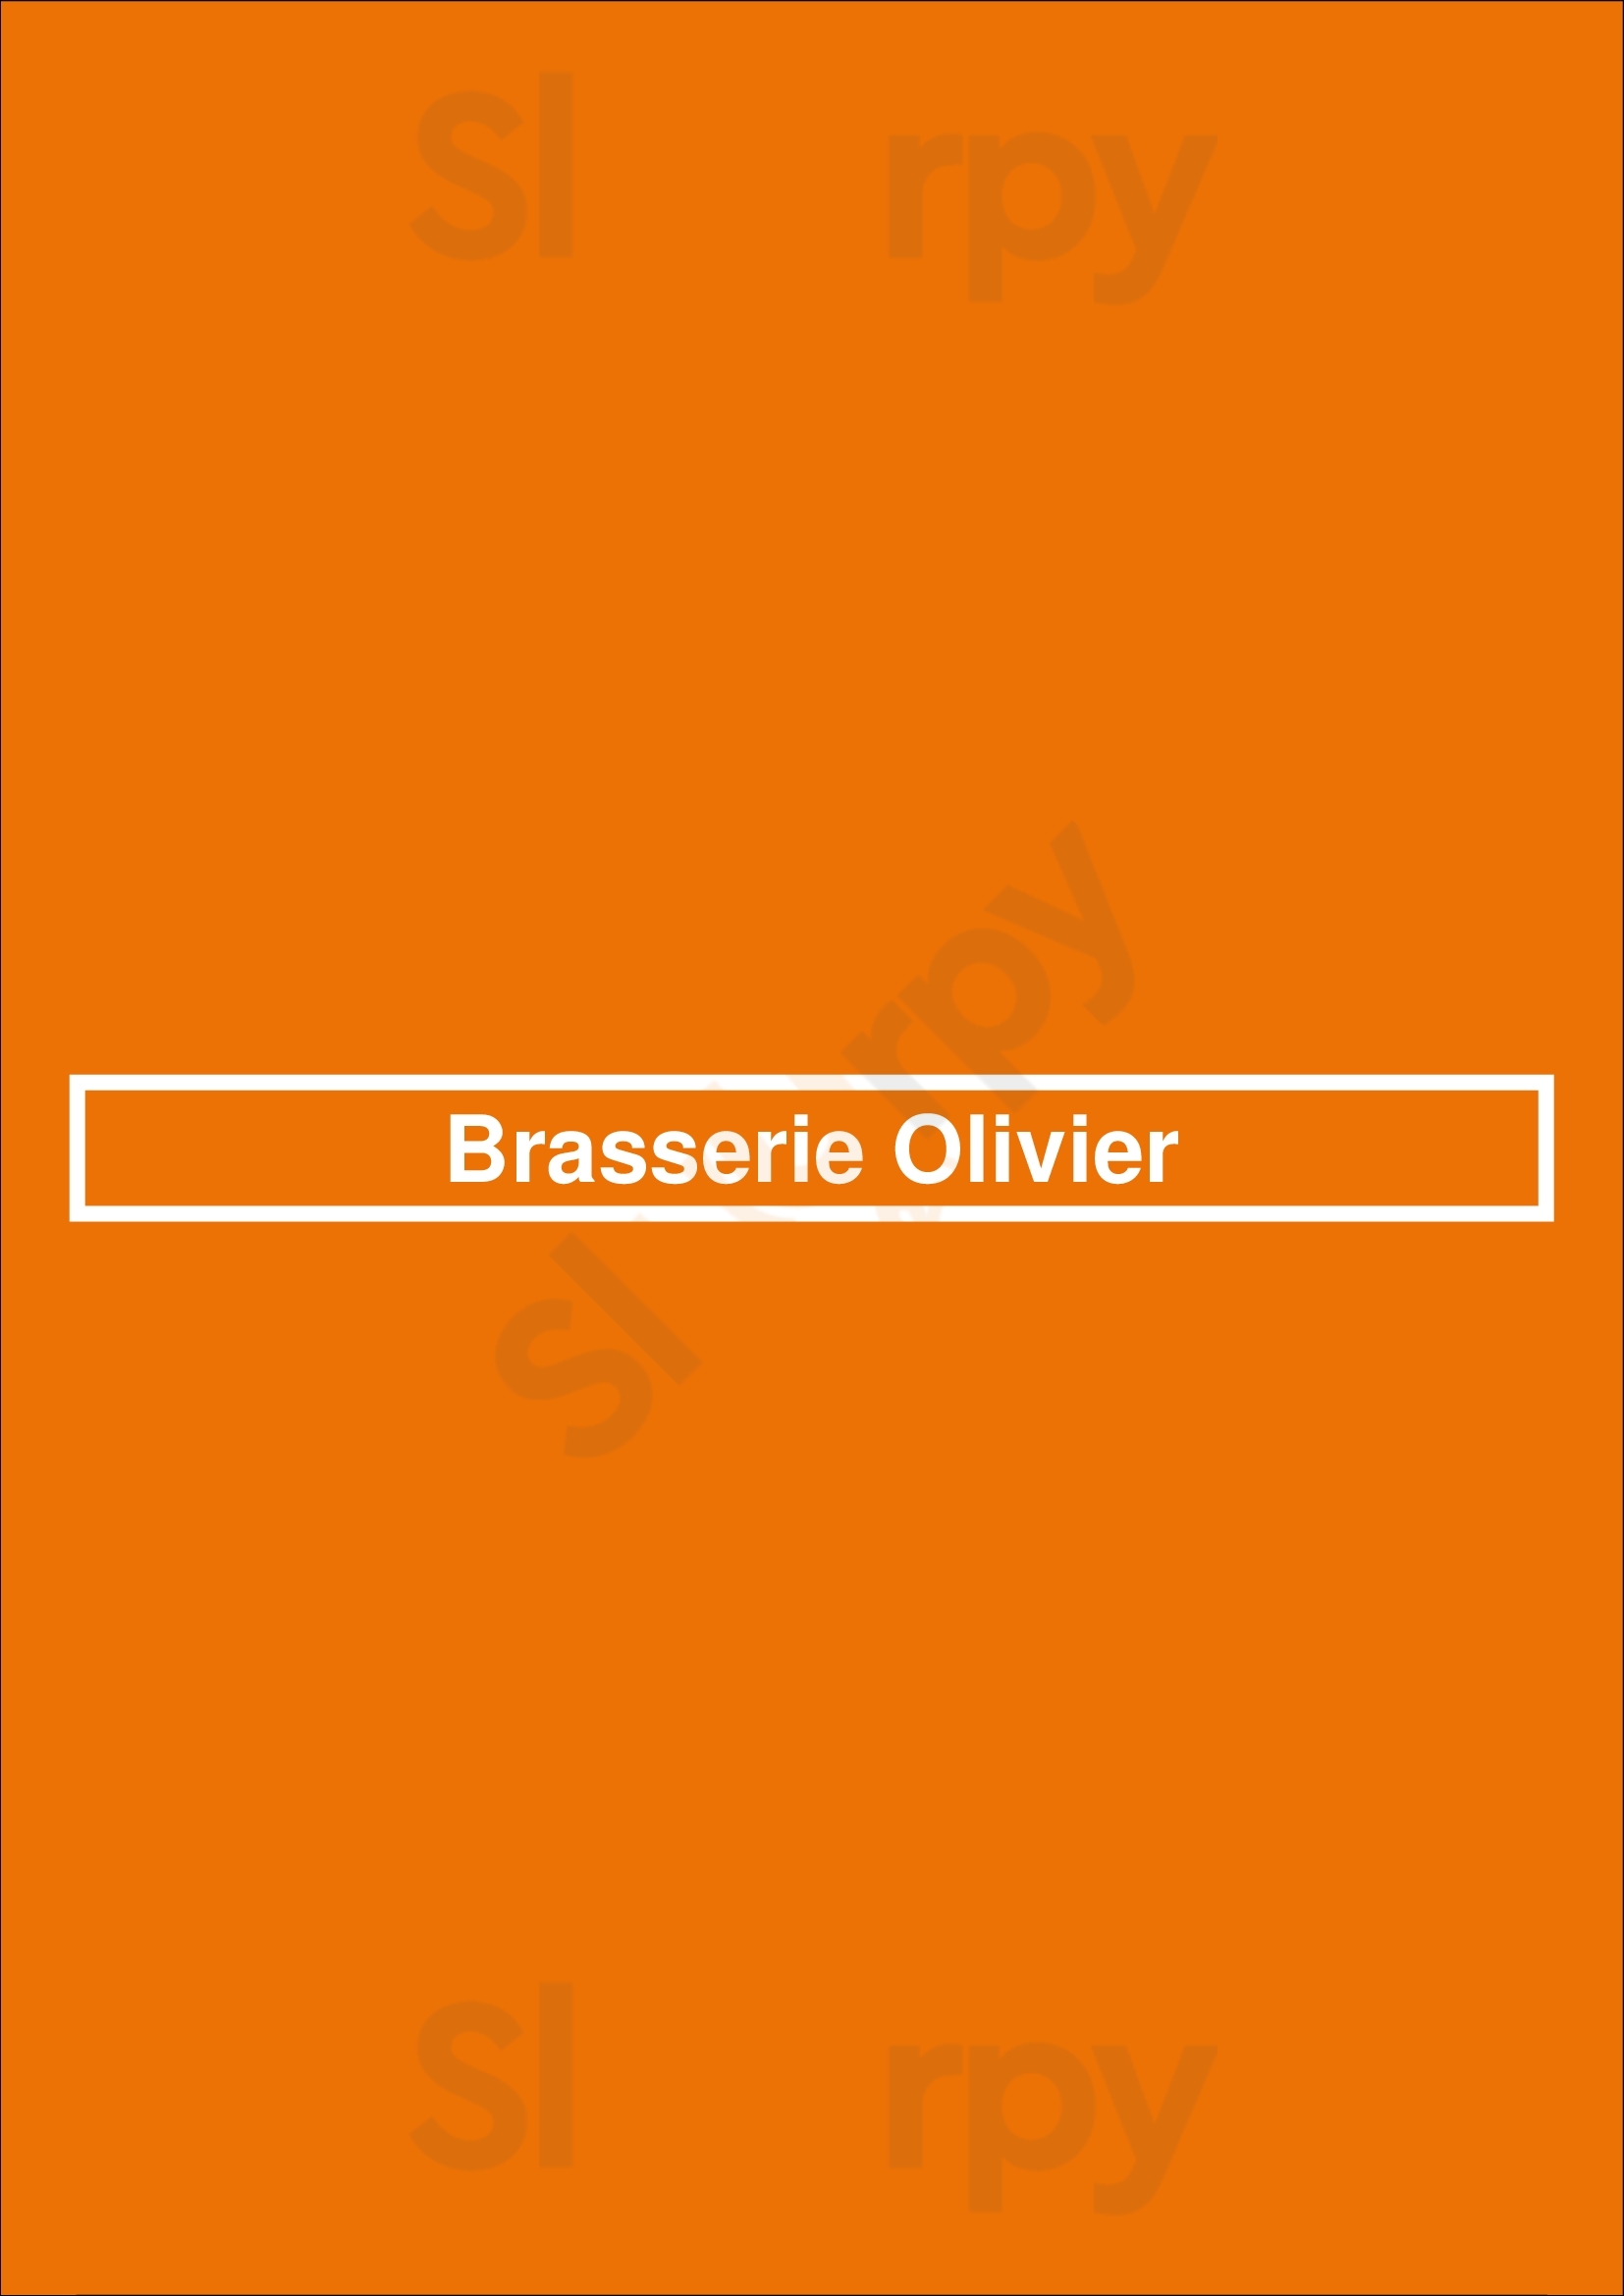 Brasserie Olivier Bilthoven Menu - 1